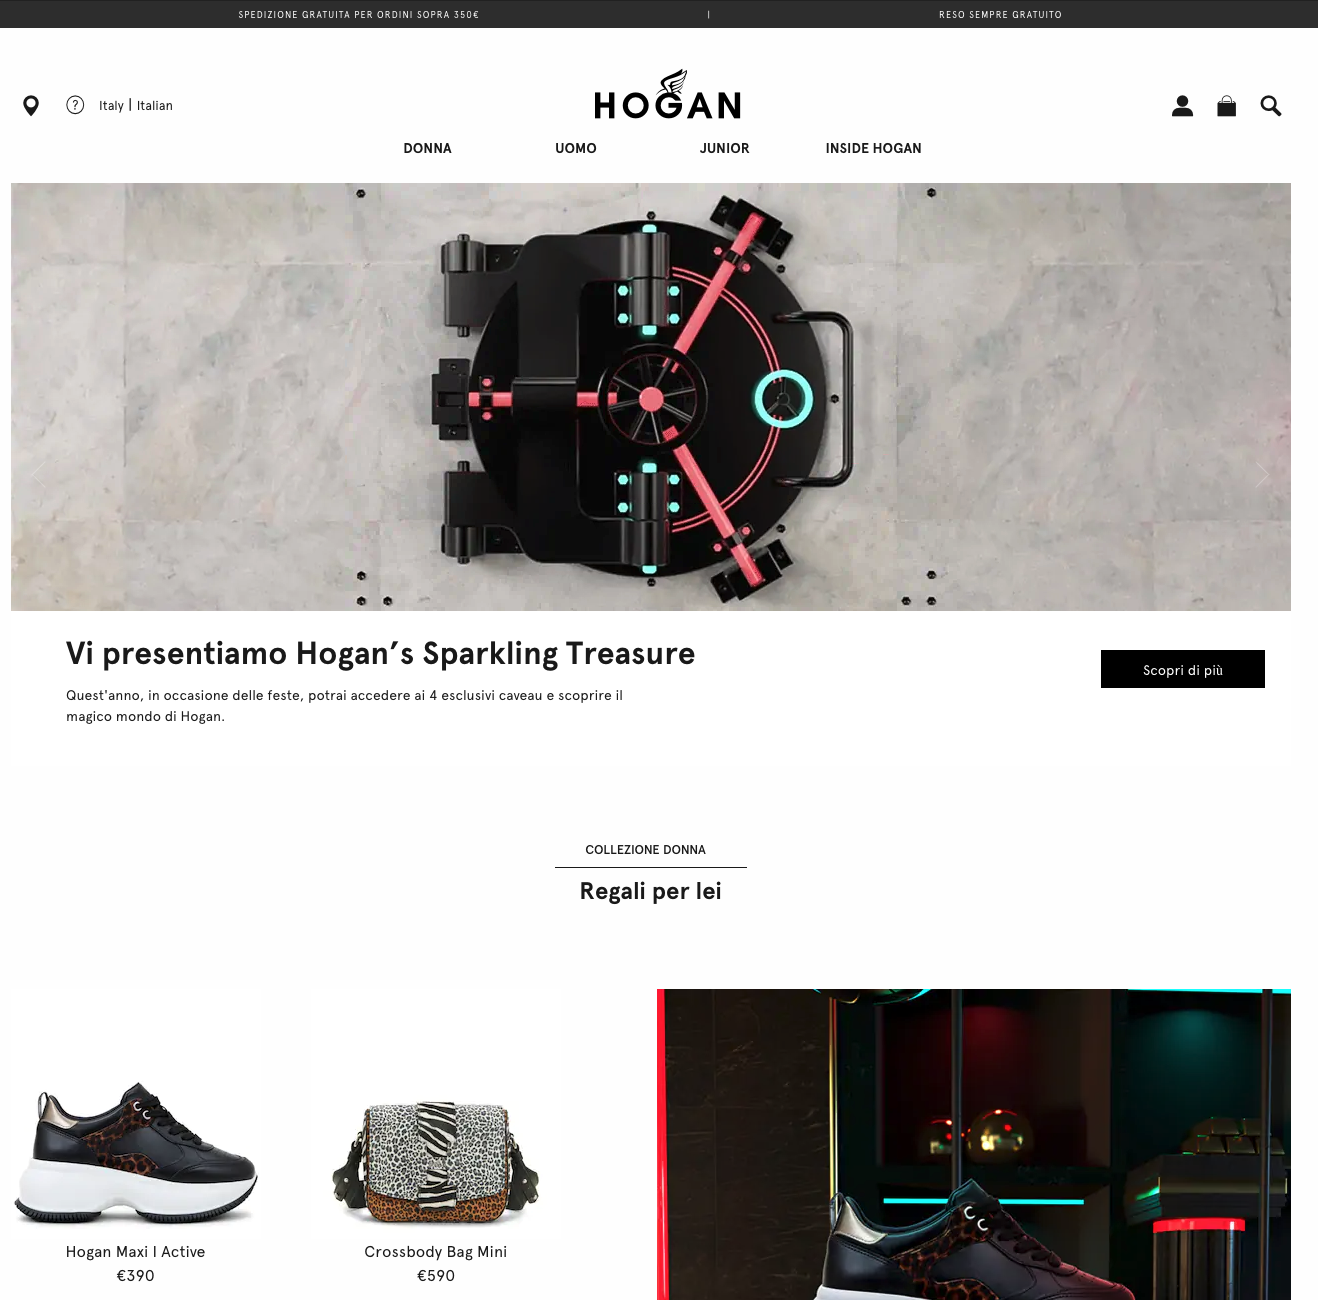 siti per comprare scarpe online a prezzi bassi